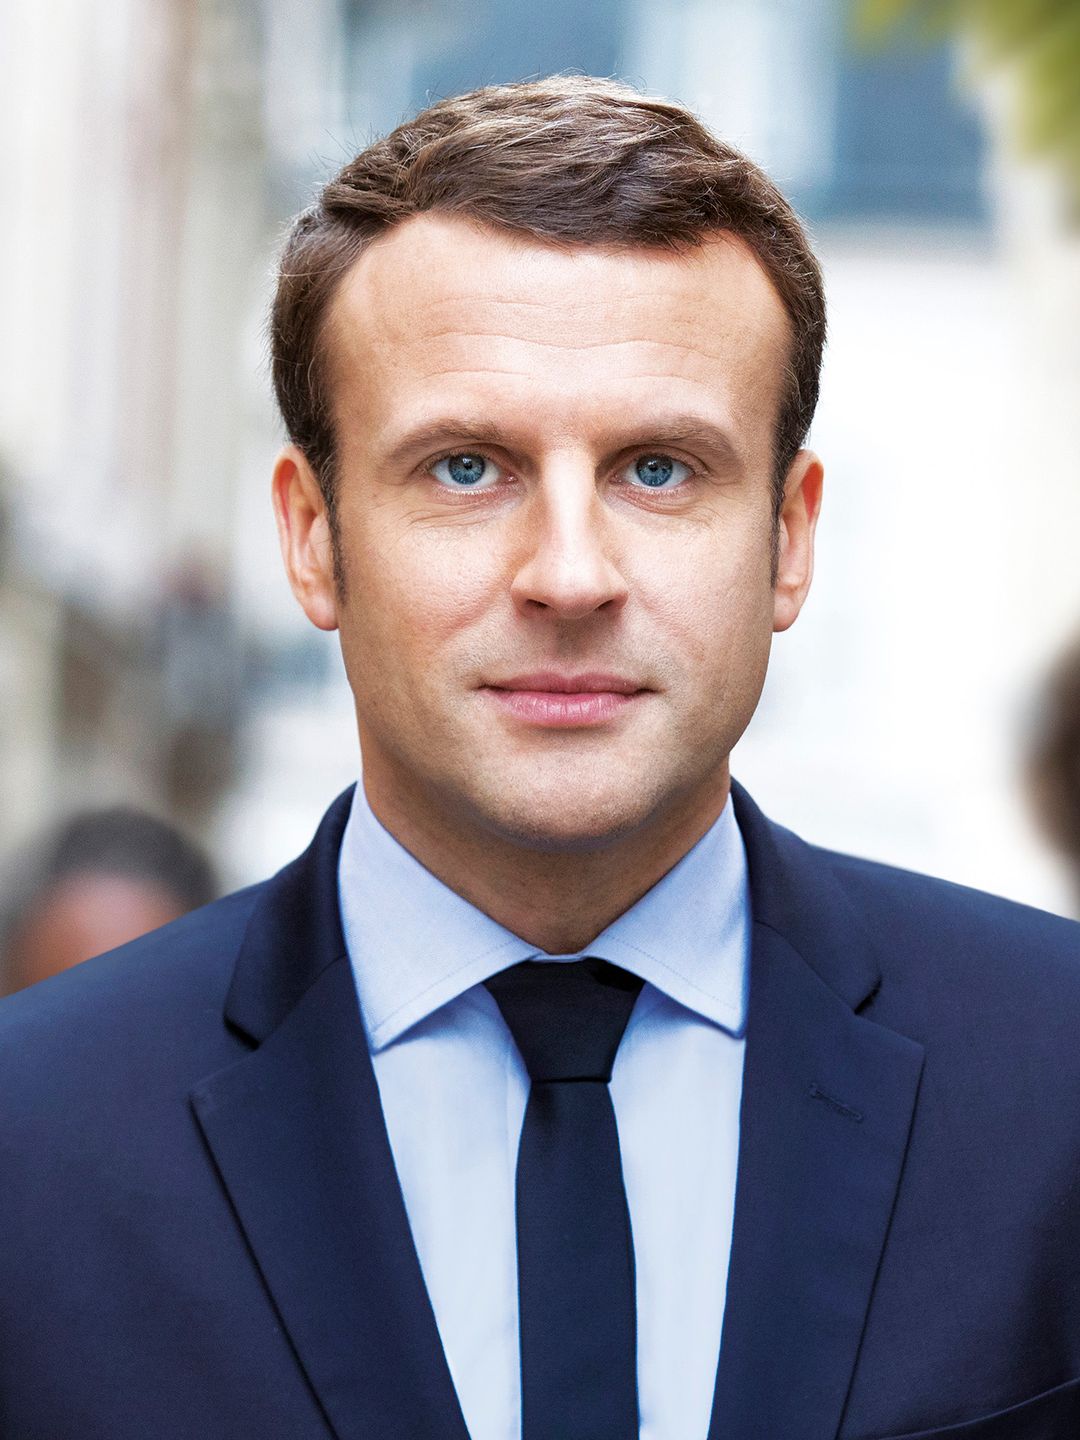 Emmanuel Macron background